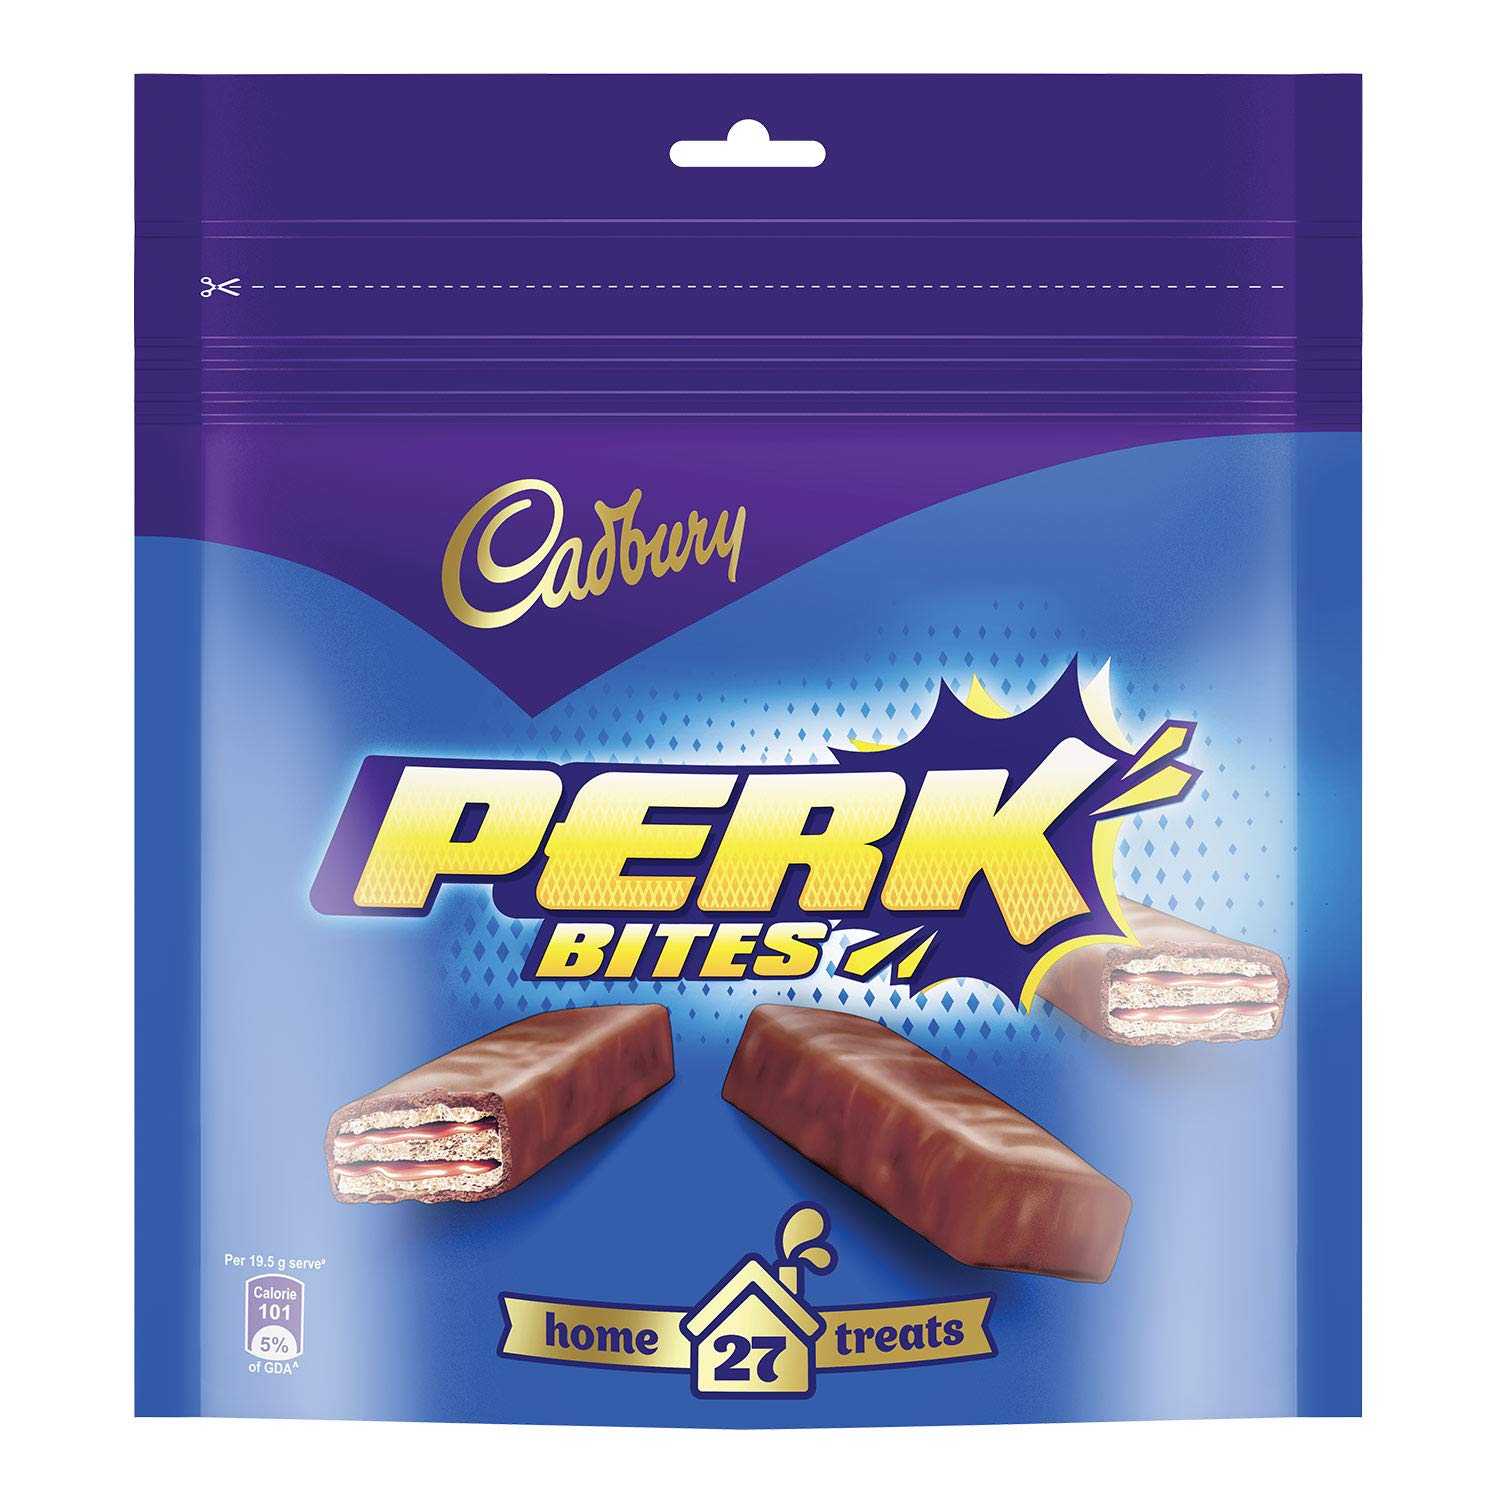 Cadbury Perk Home Treats Chocolate| 175.5 gm